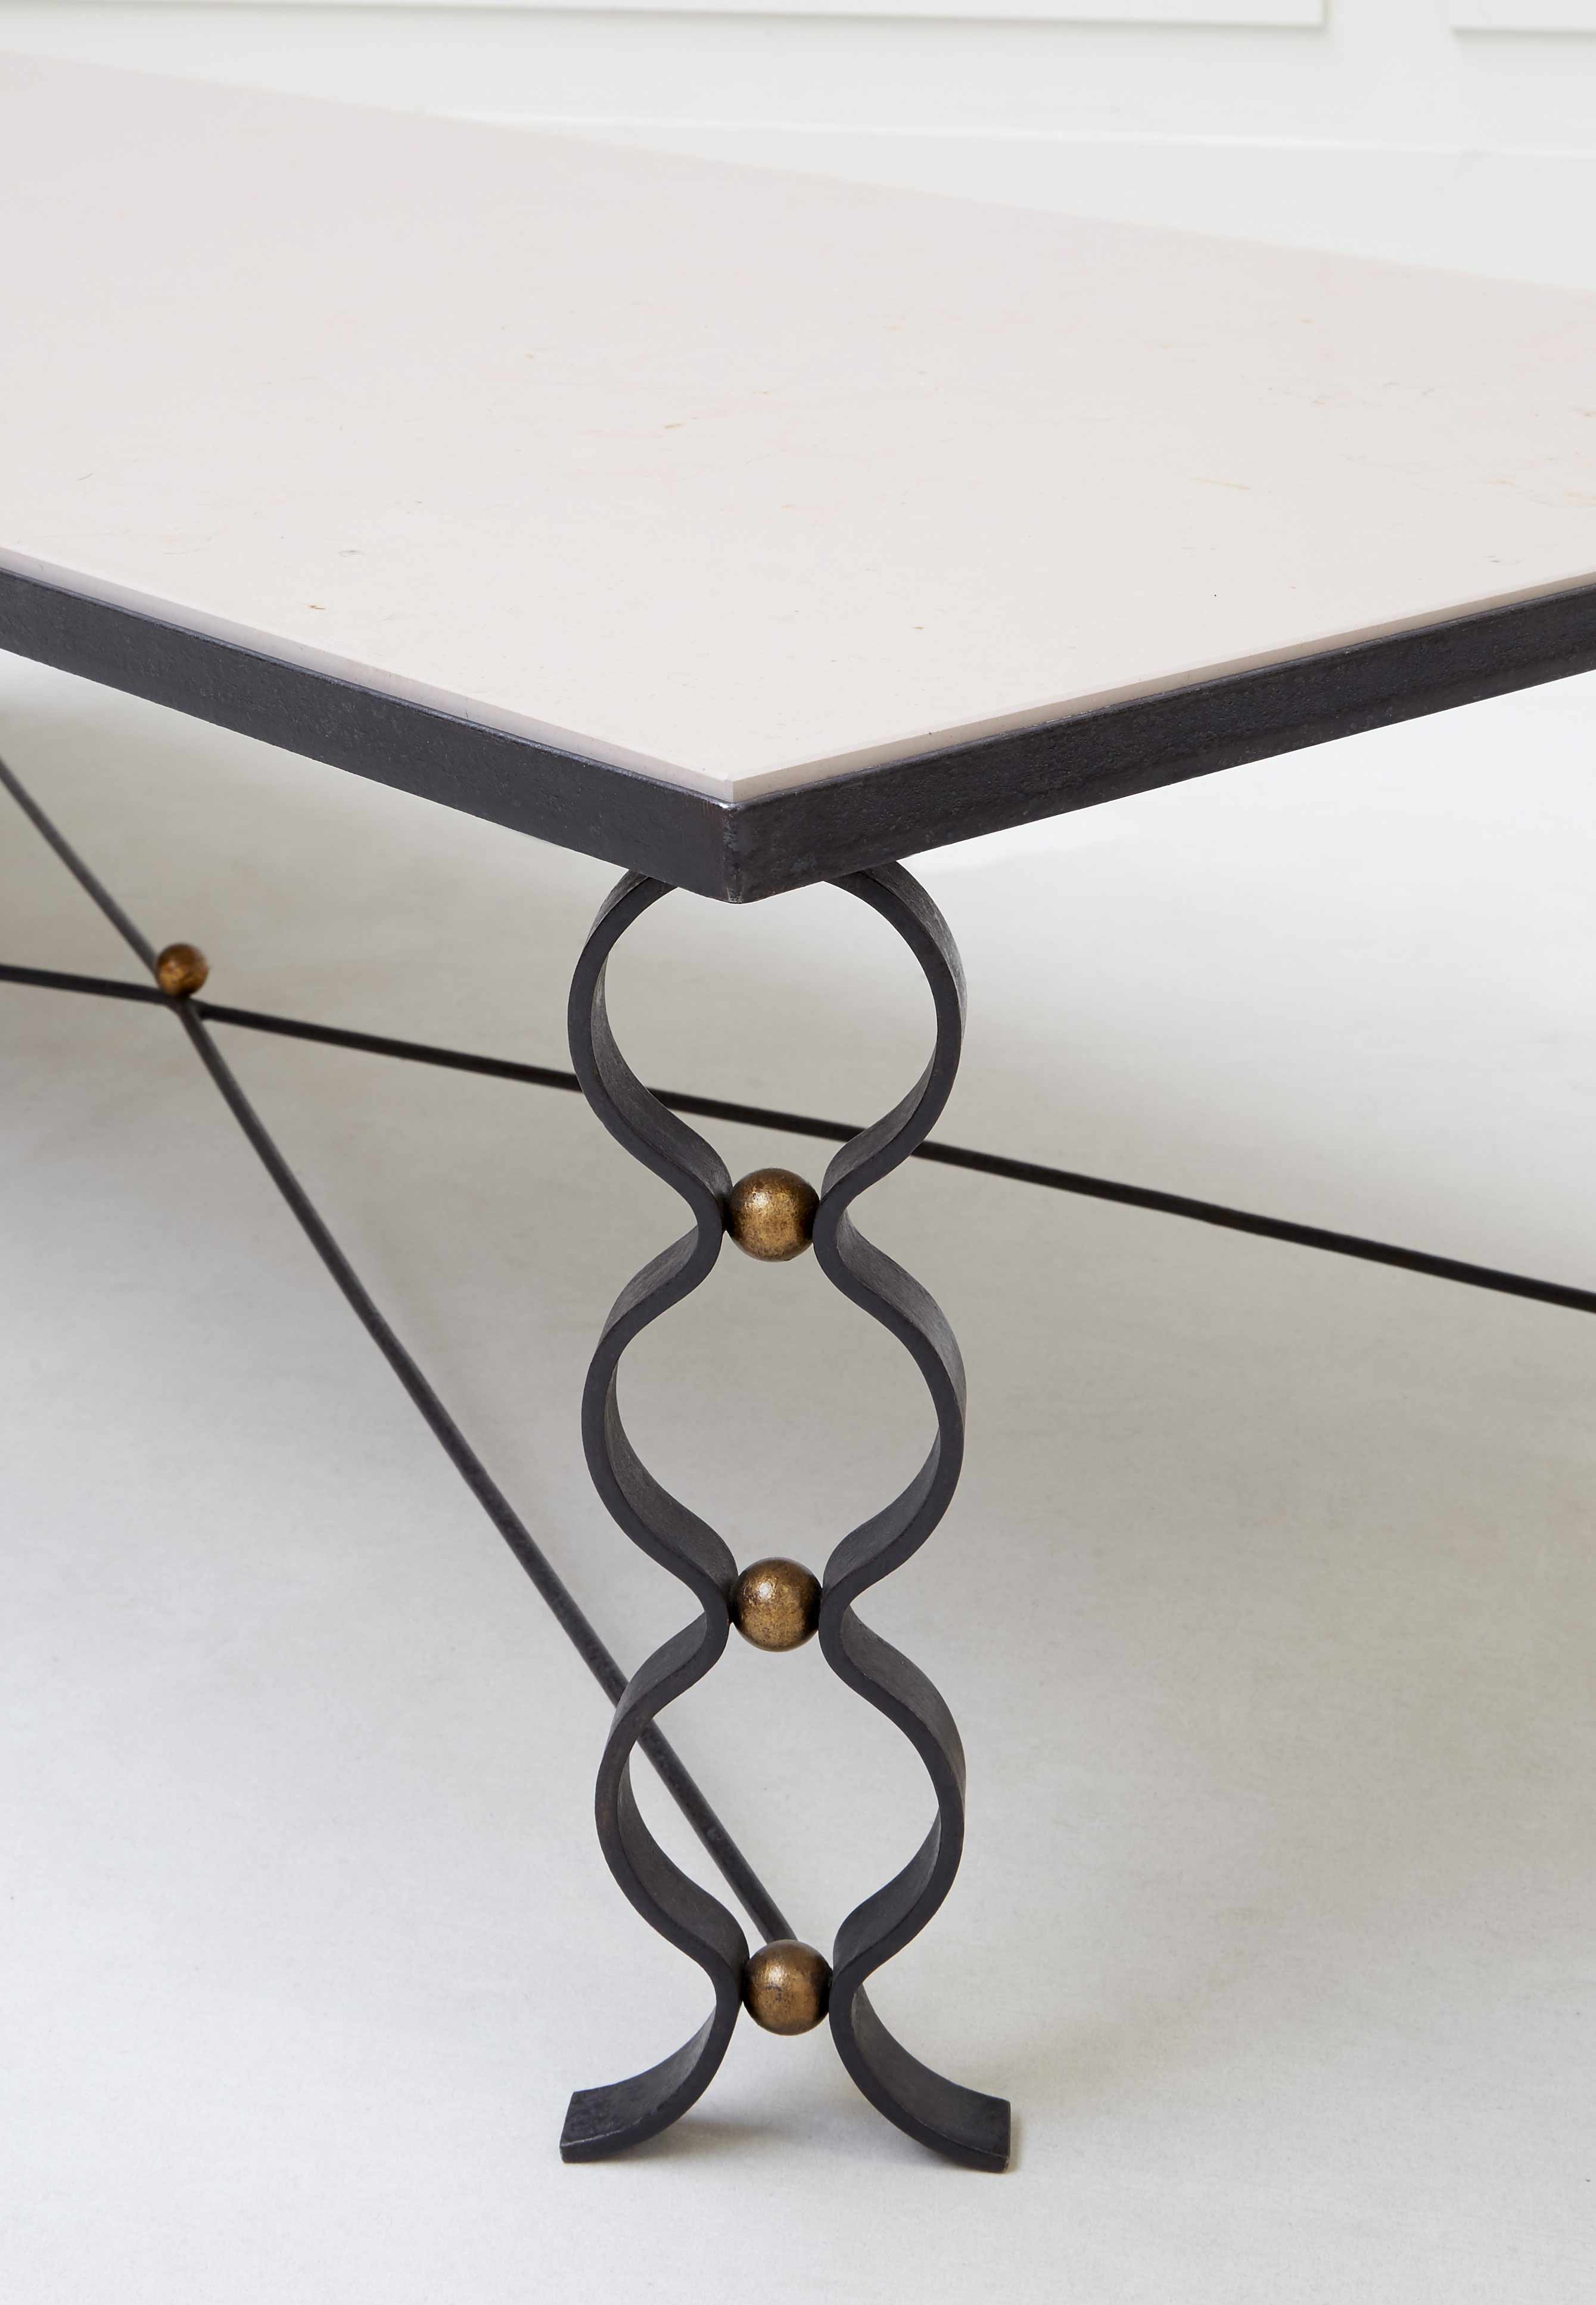 Jean Royère, “Ruban” coffee table, vue 01